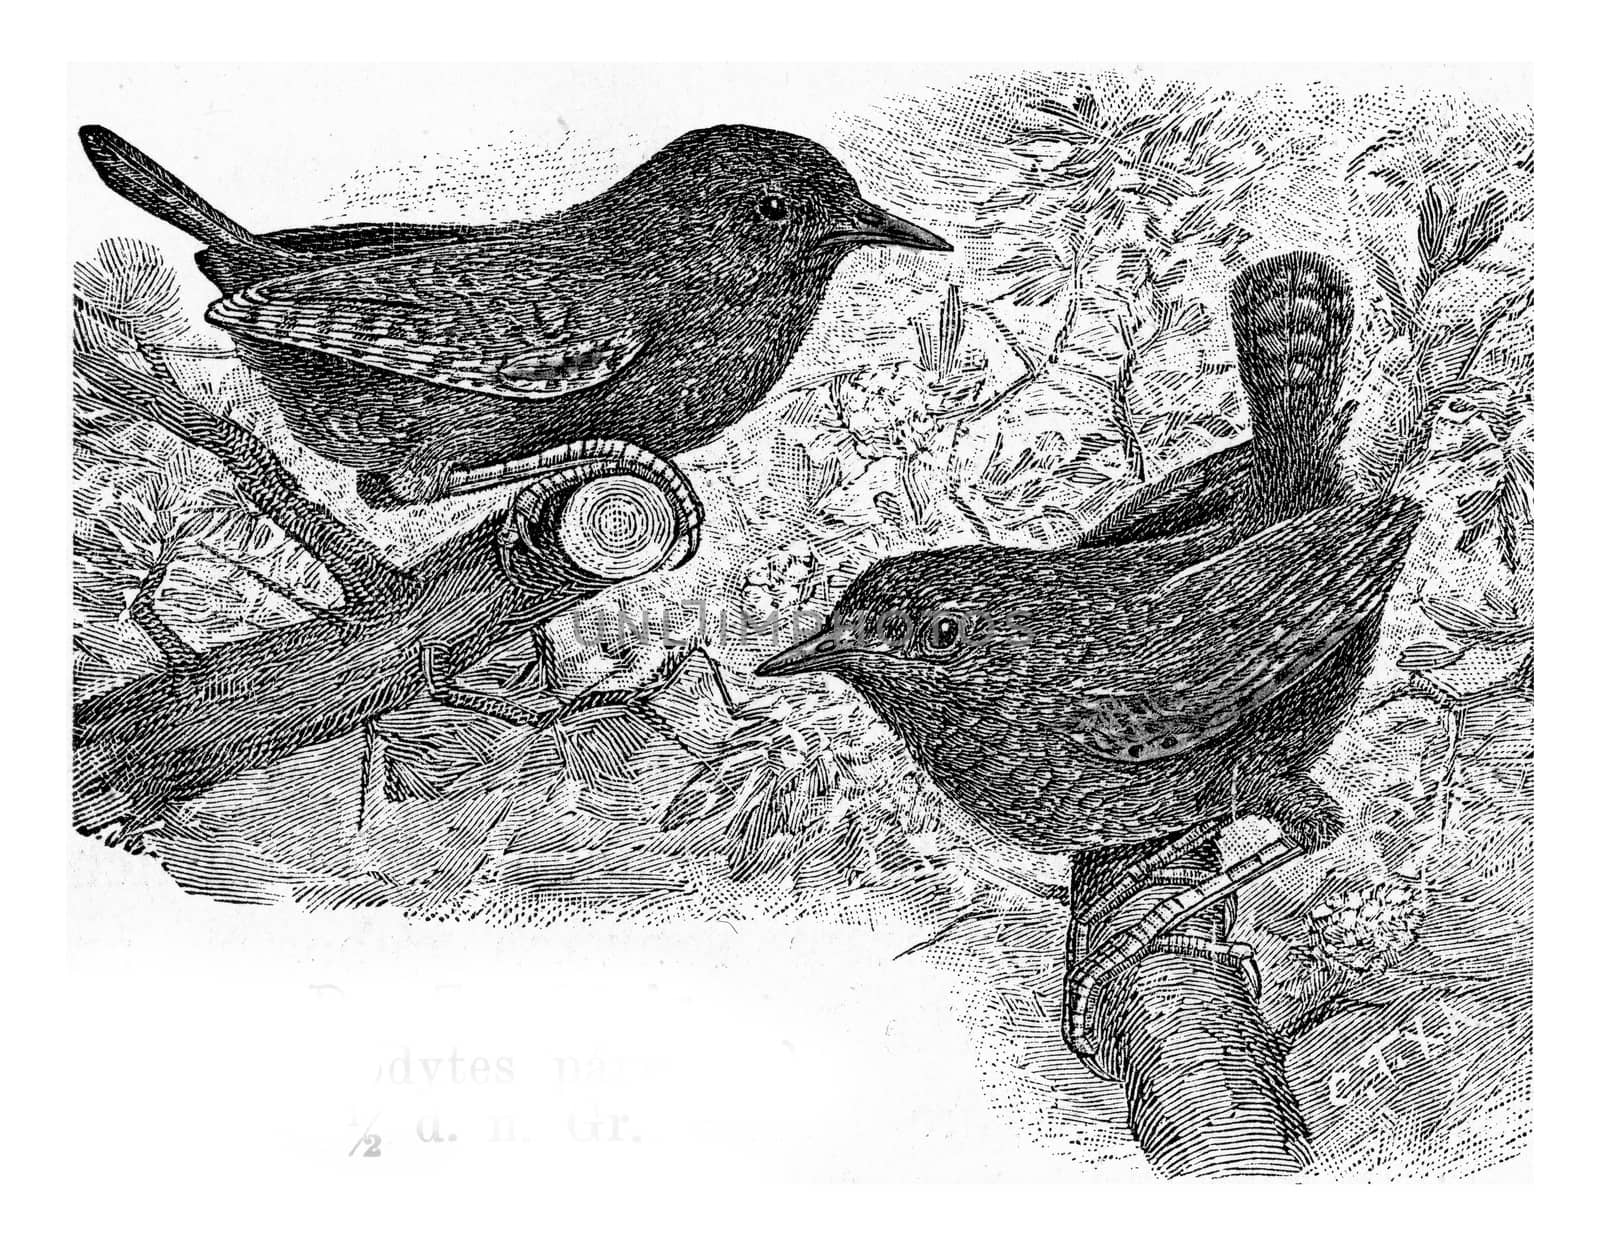 The wren, vintage engraved illustration. From Deutch Vogel Teaching in Zoology.
